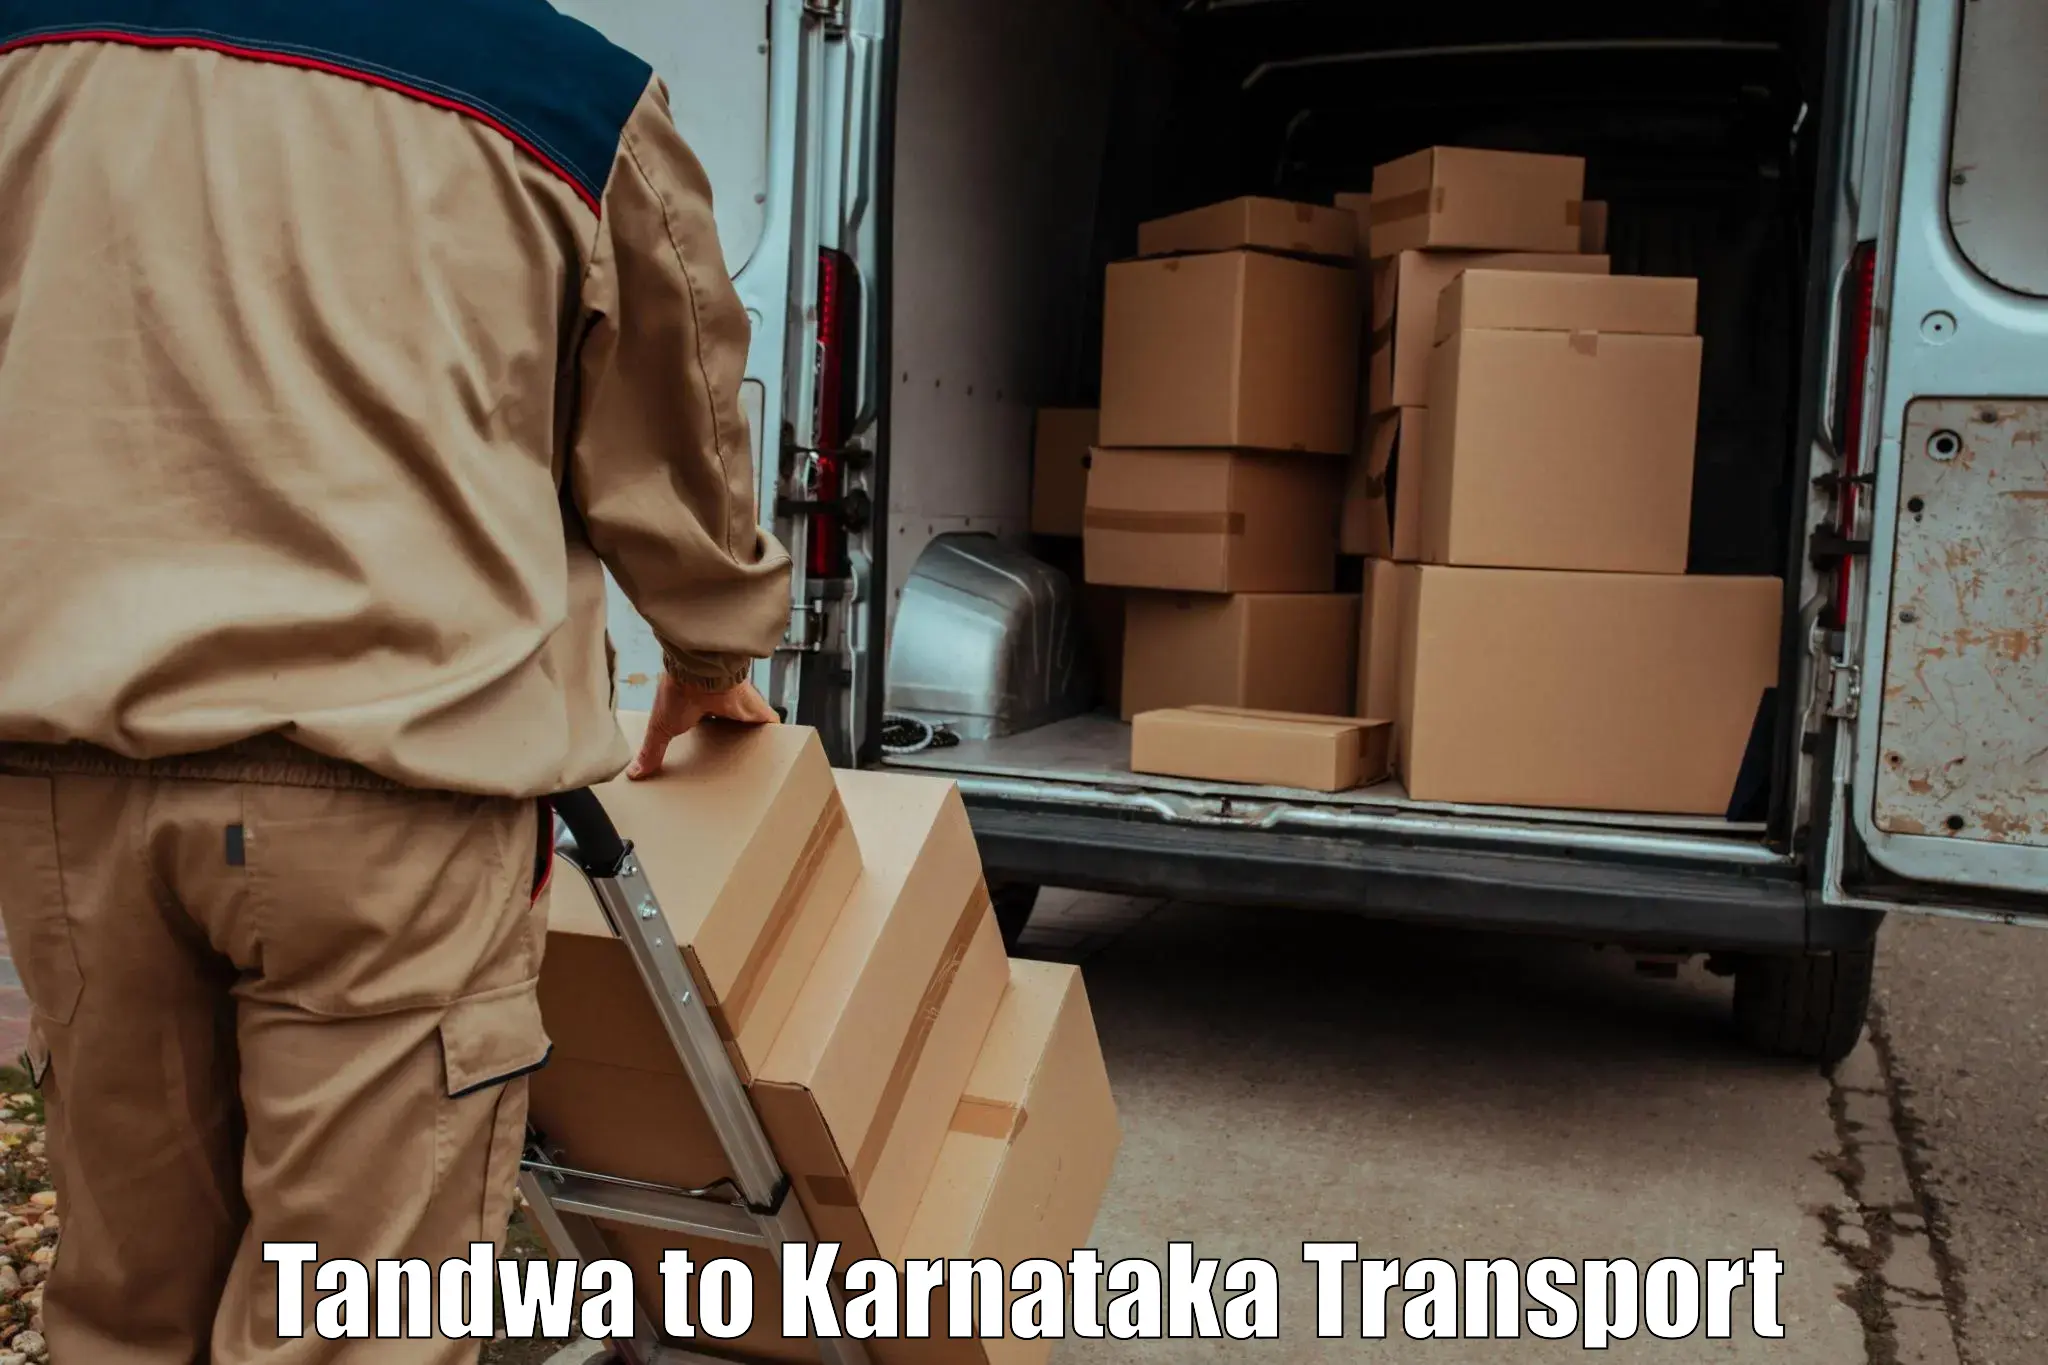 Transport shared services Tandwa to Karnataka